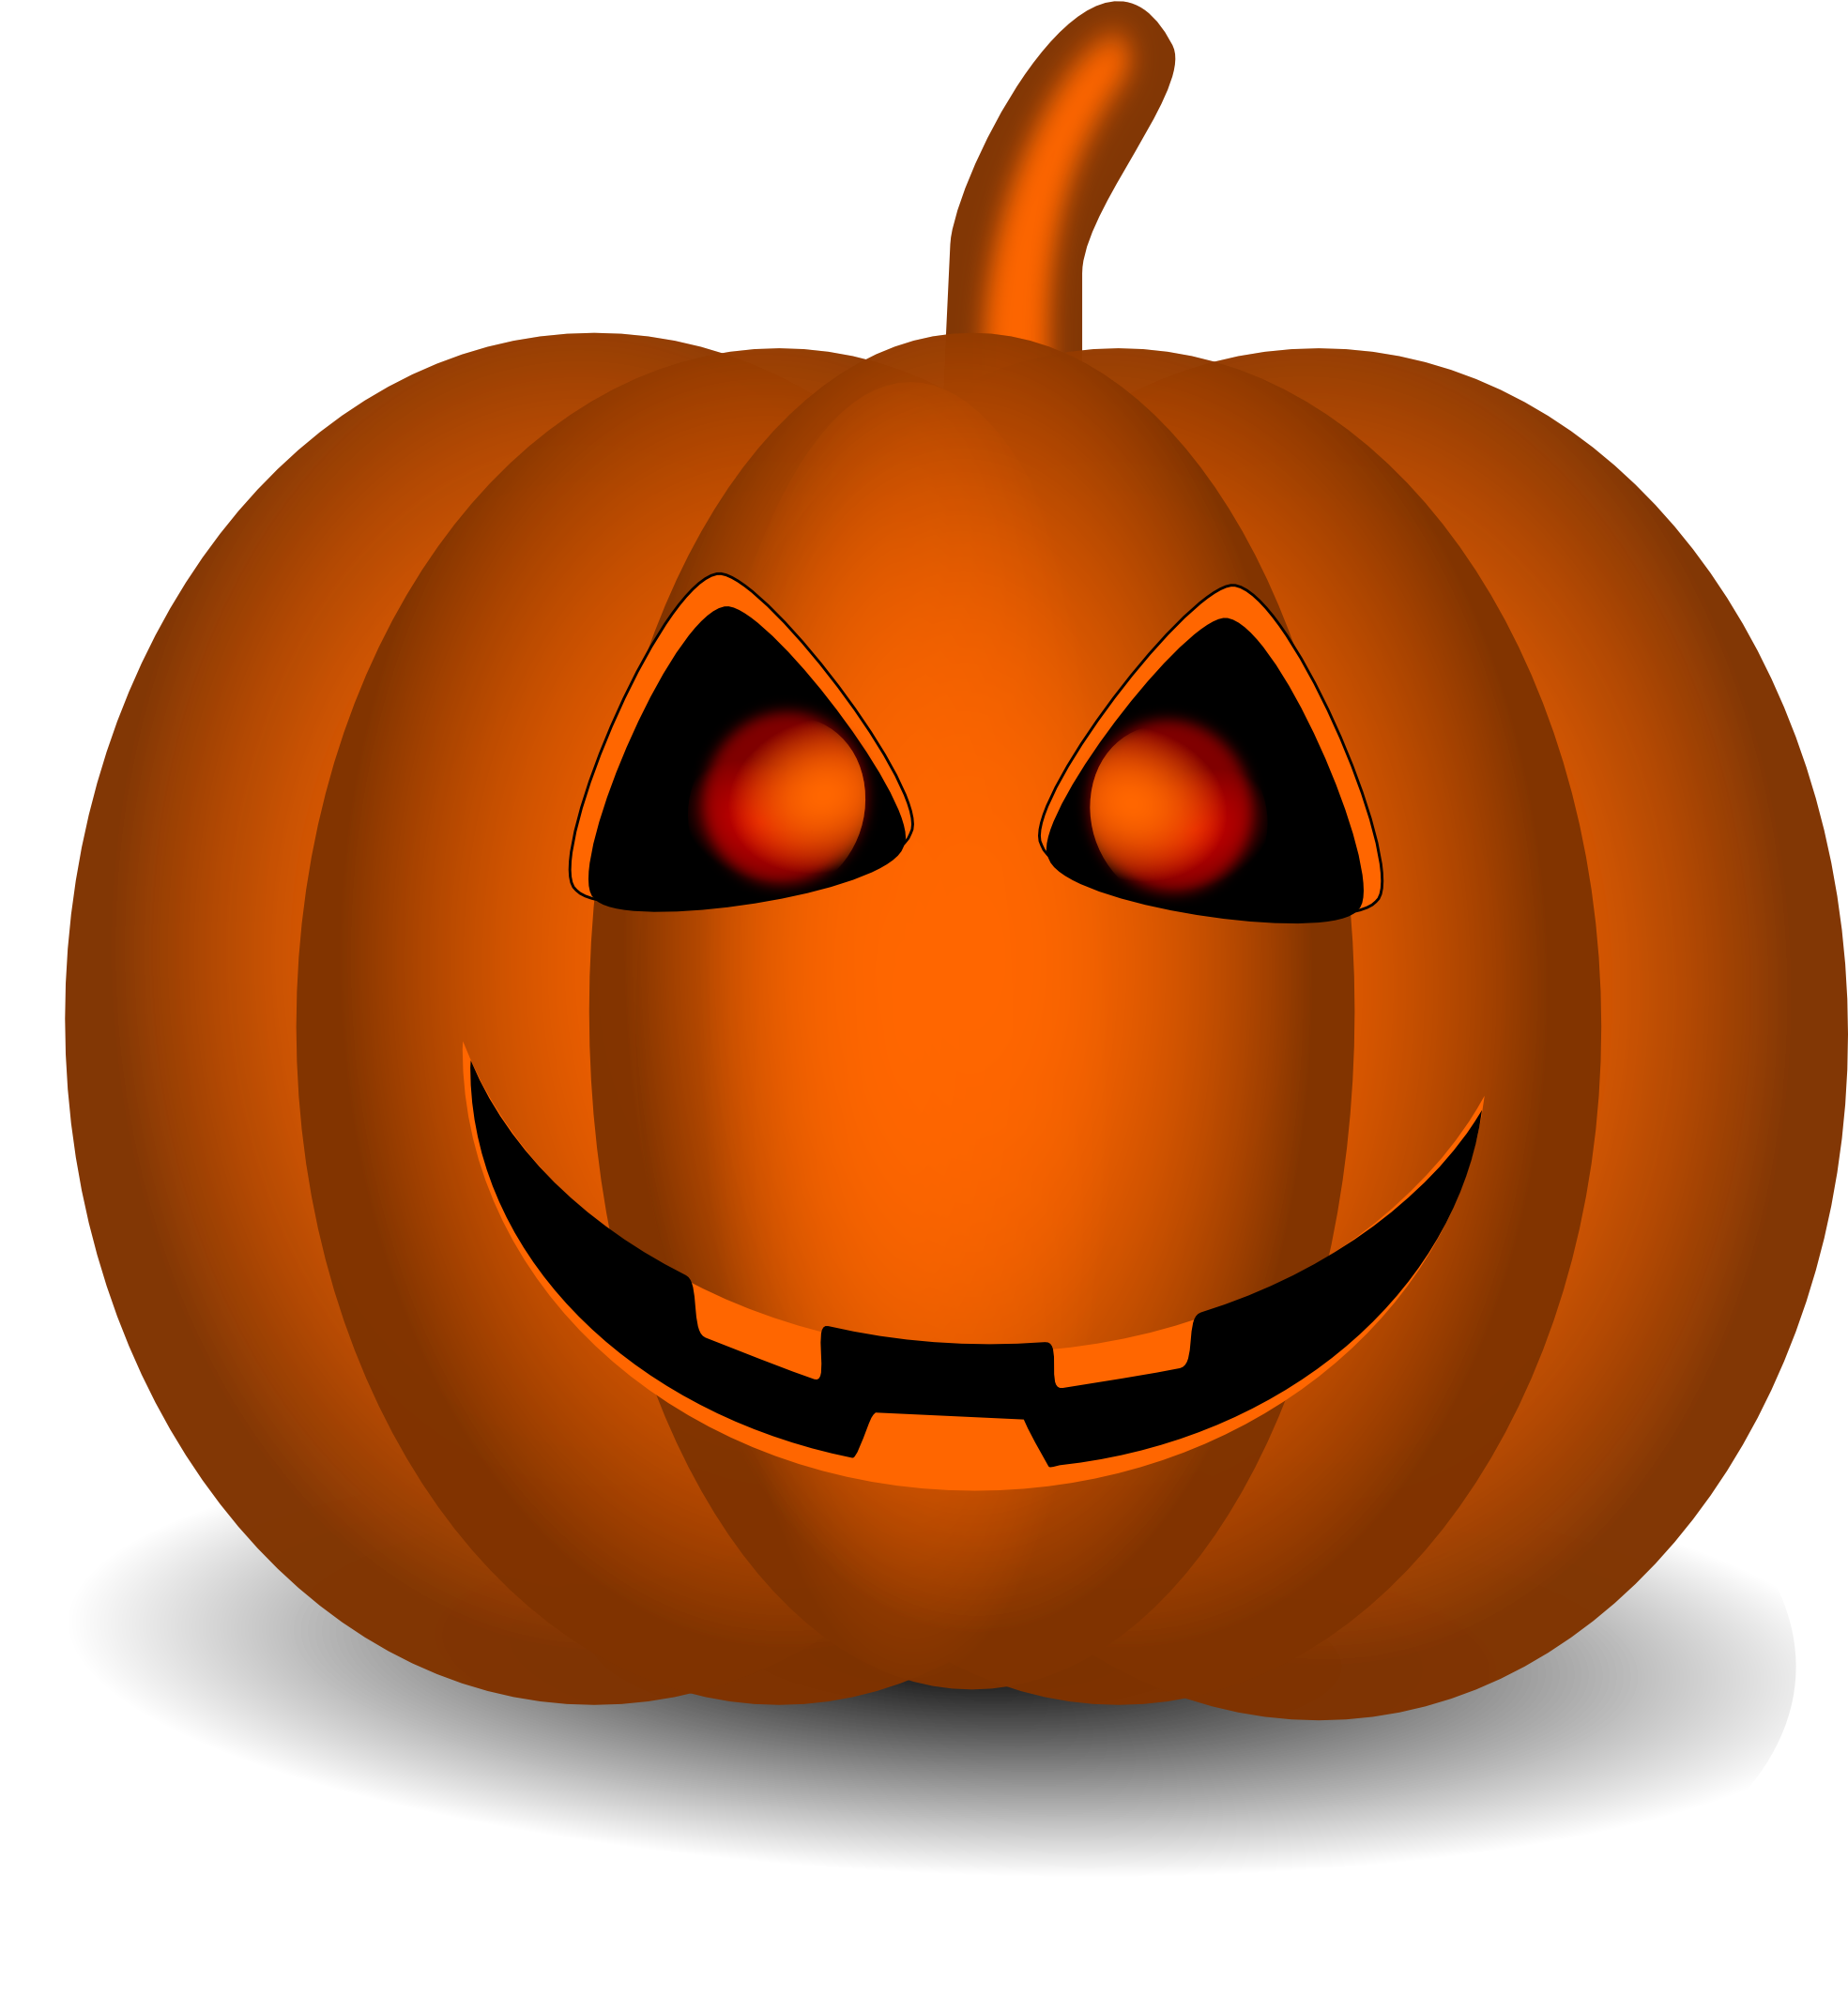 Pumpkin vector png. Download halloween free icons